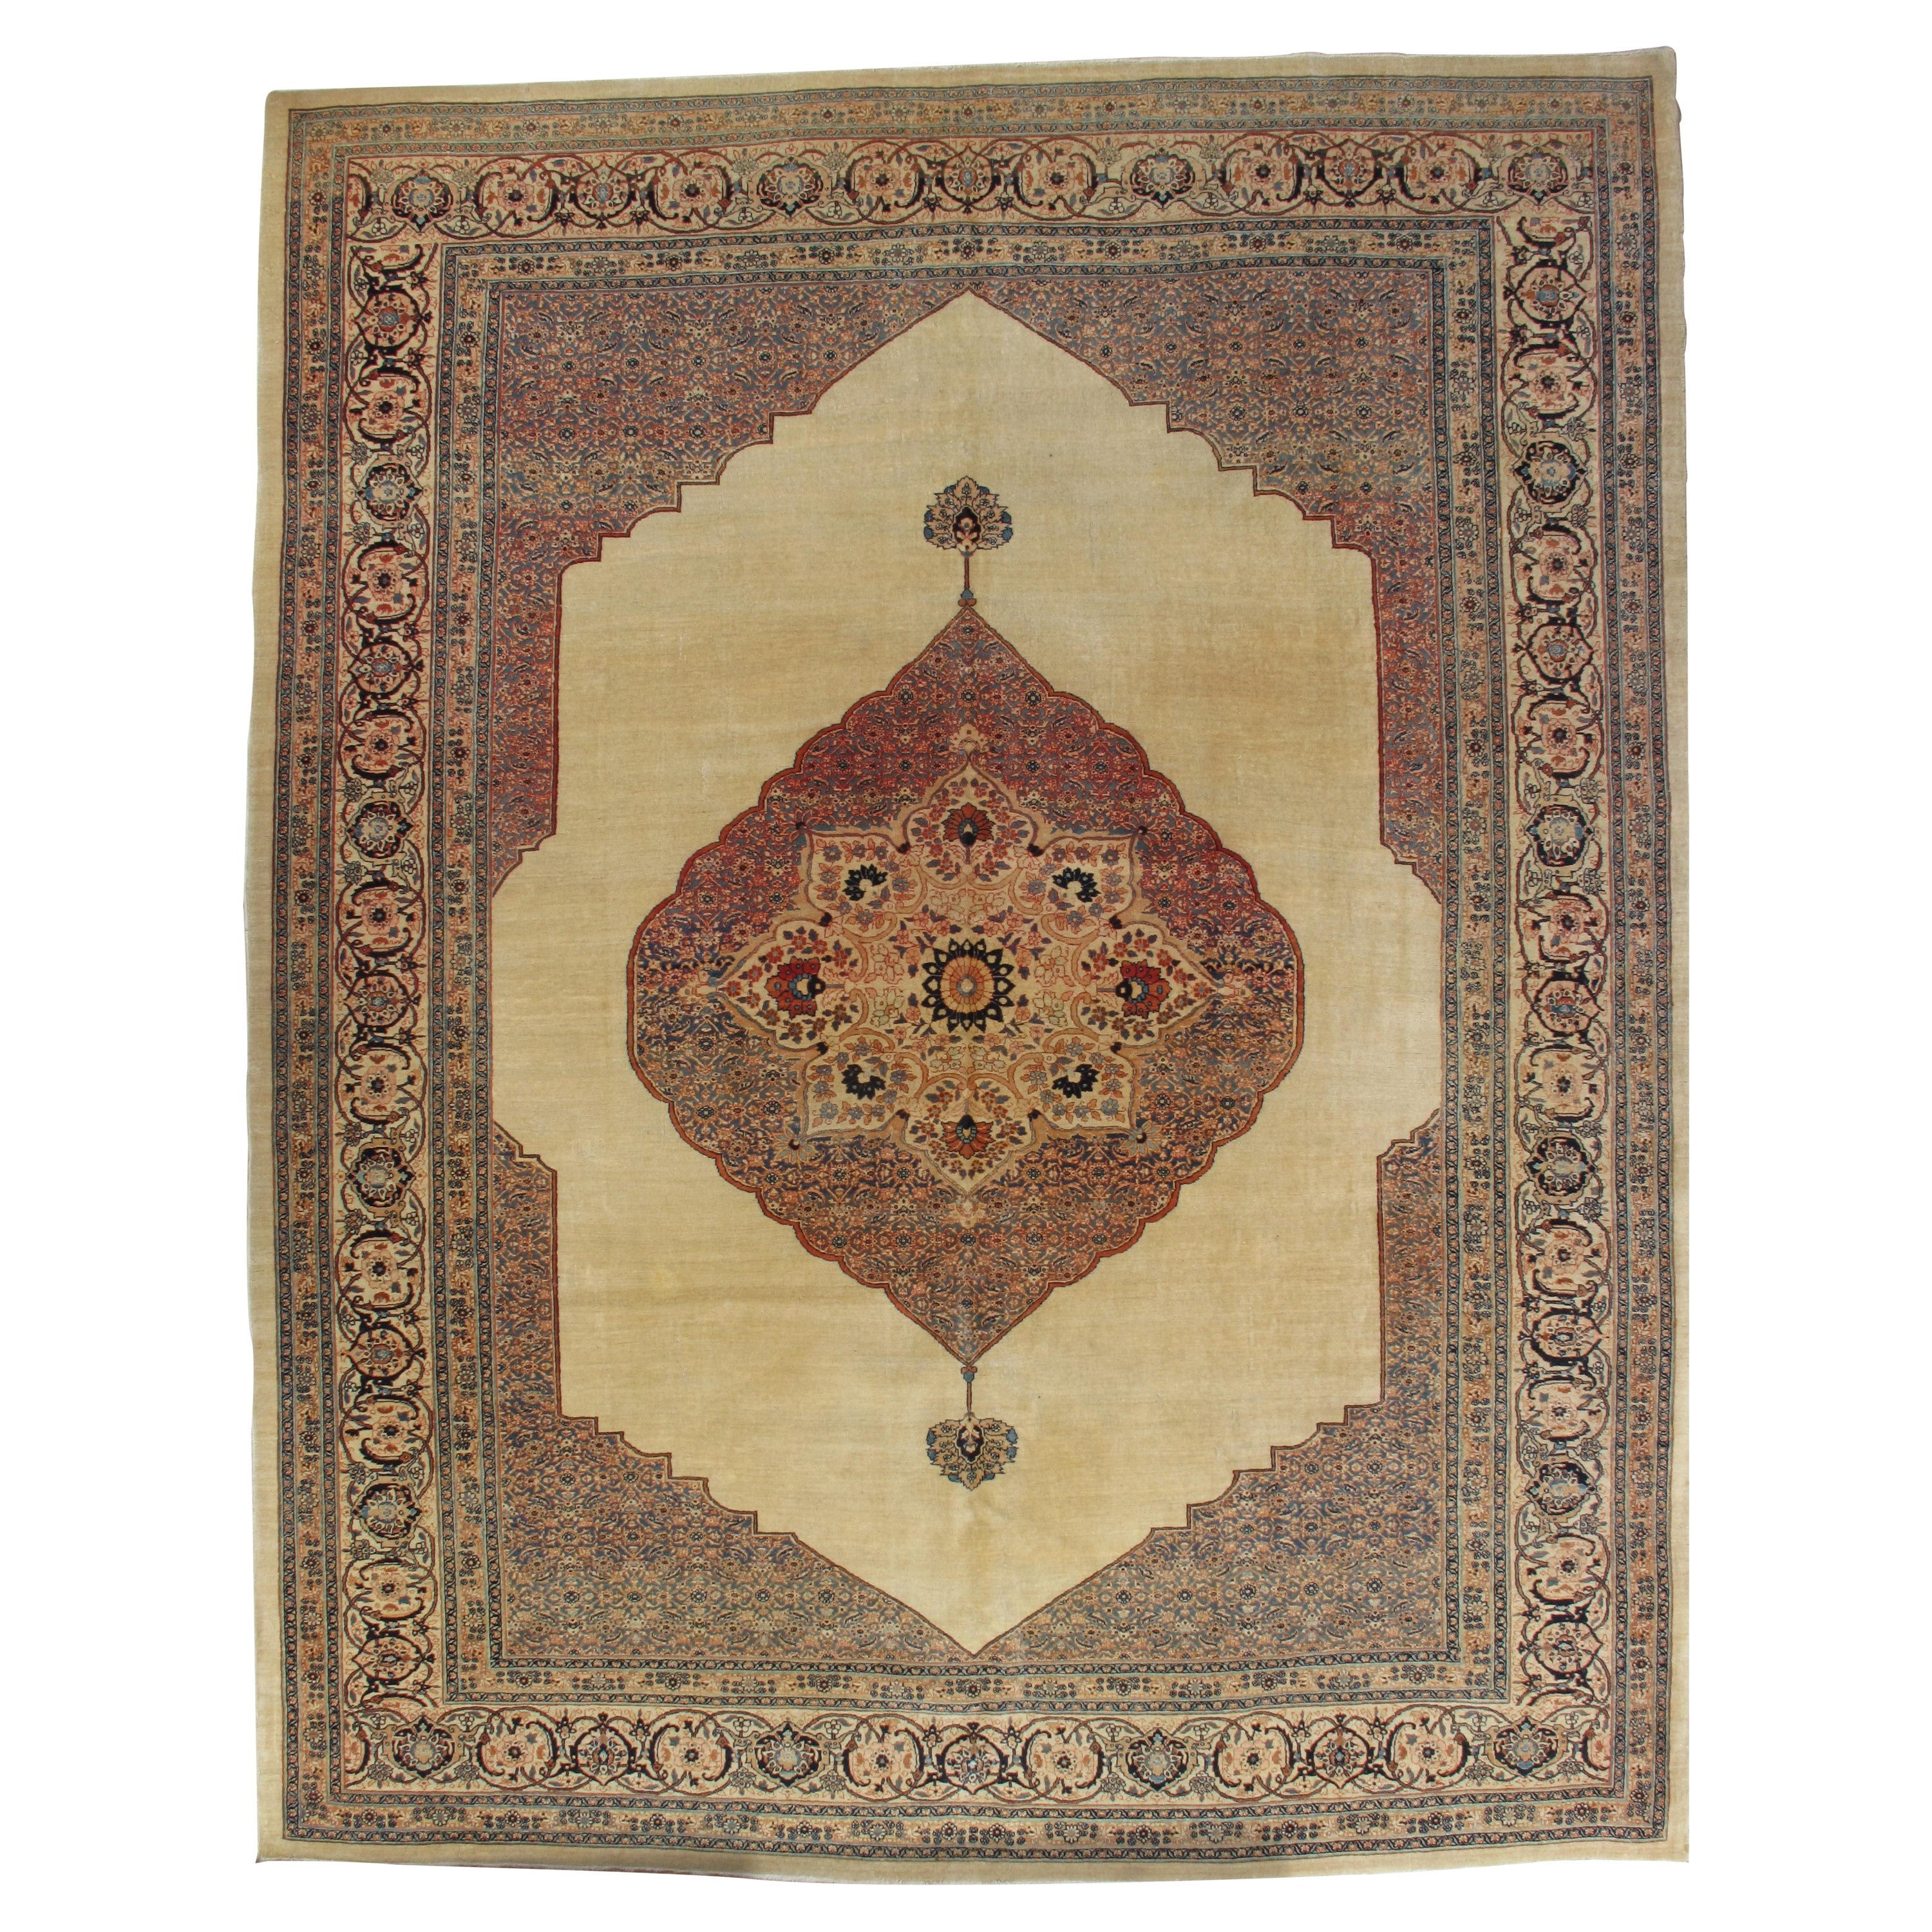 Antique Tabriz Carpet, Hadji Jalili Persian Rug, Earth Tones, Ivory, Terracotta